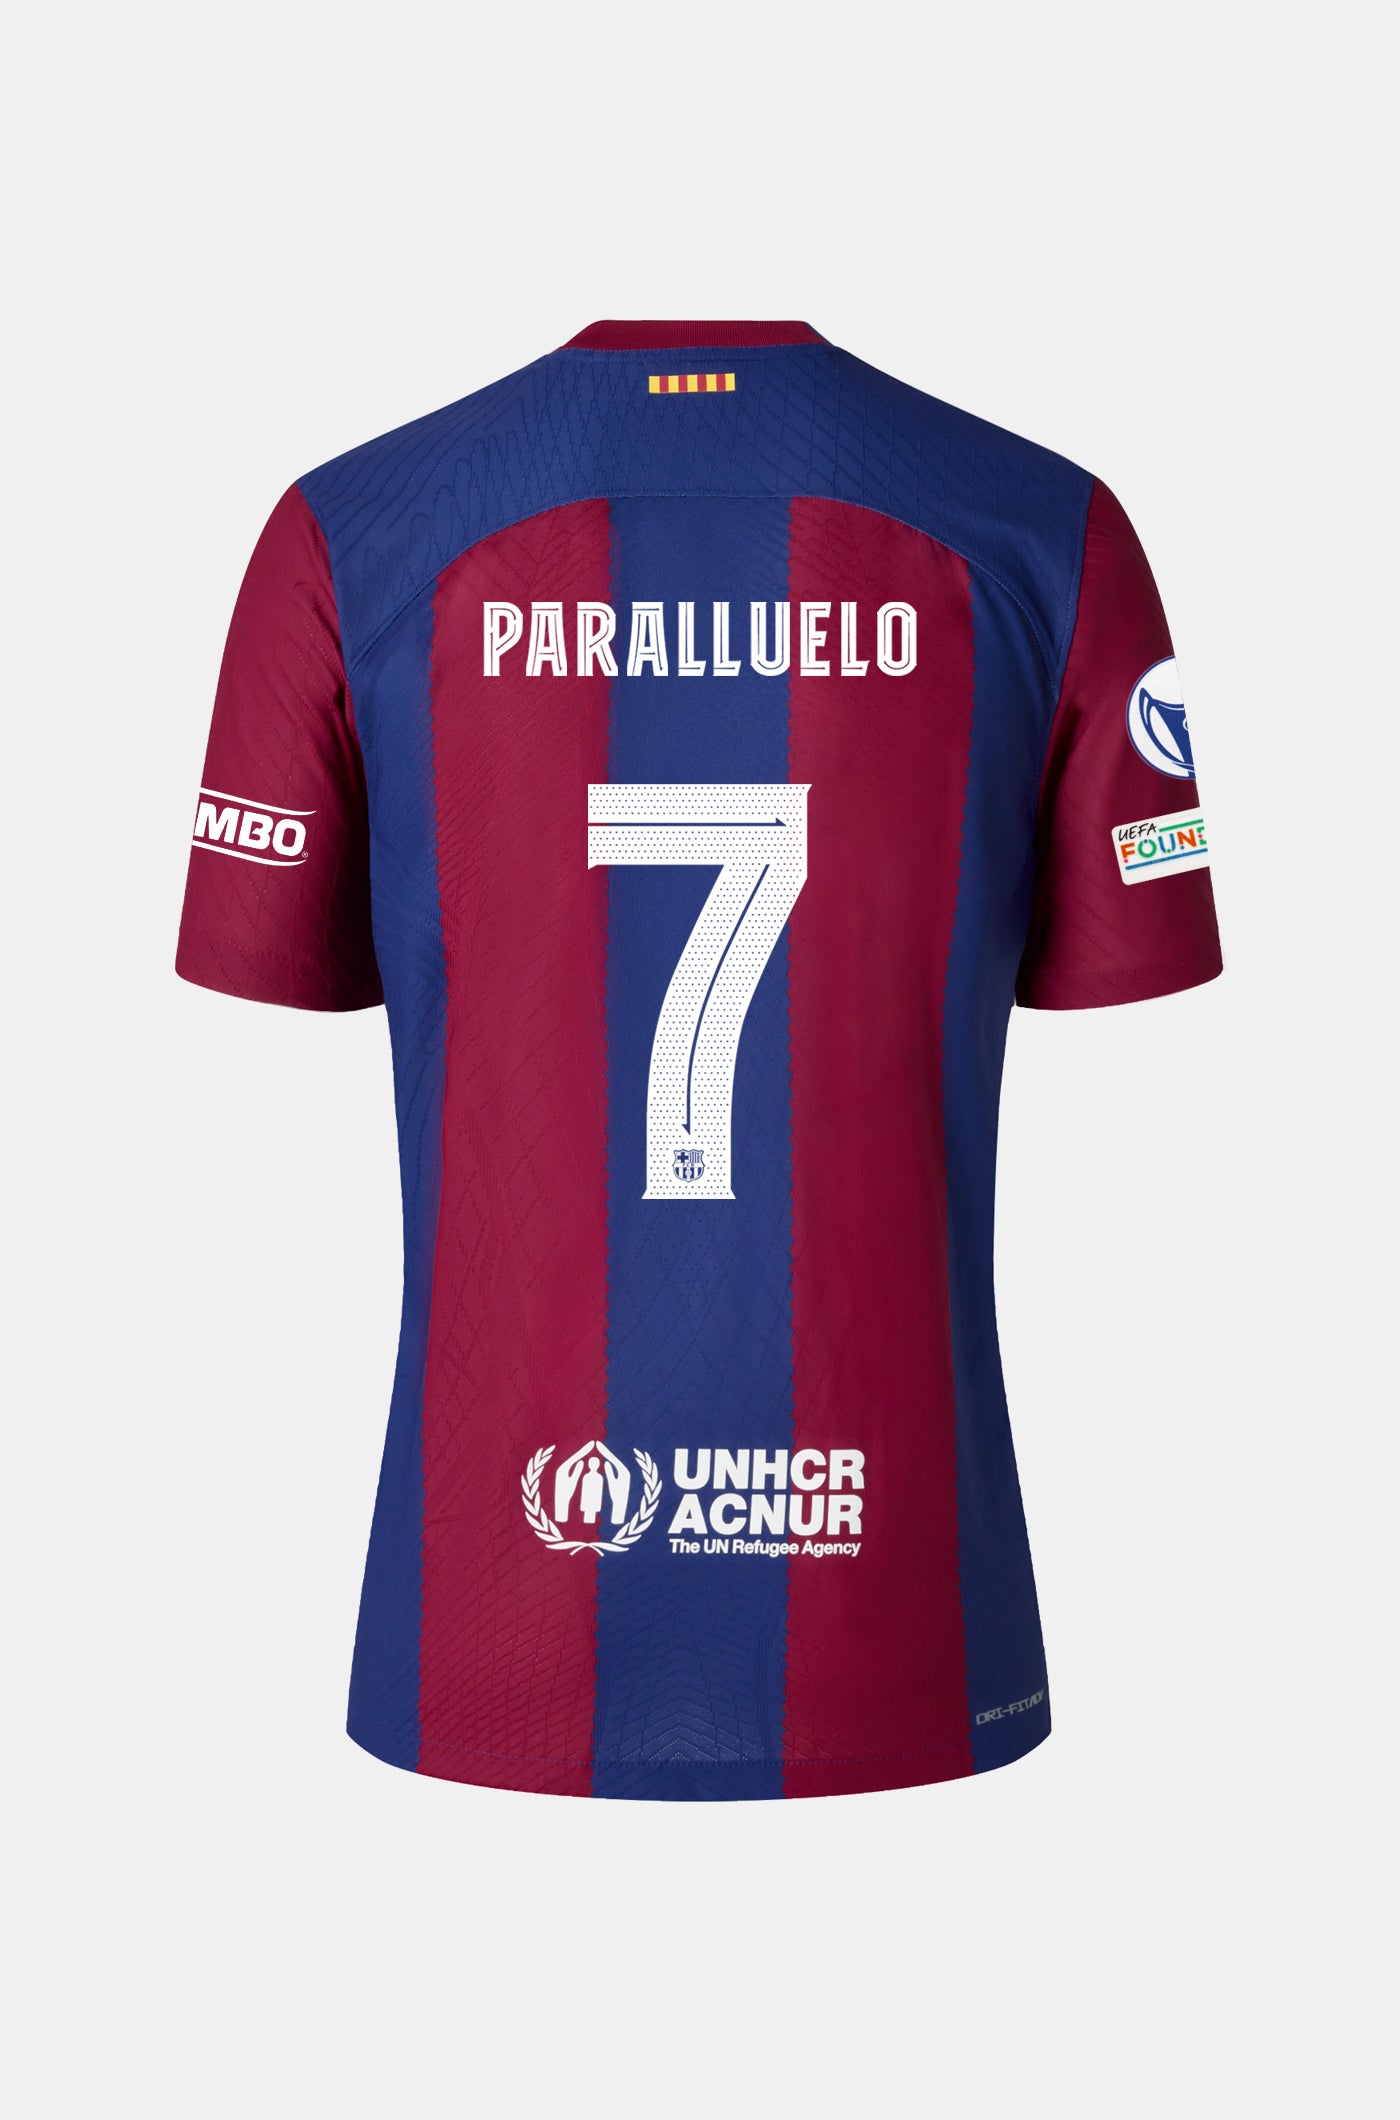 UWCL Samarreta primer equipament FC Barcelona 23/24 - Júnior - PARALLUELO